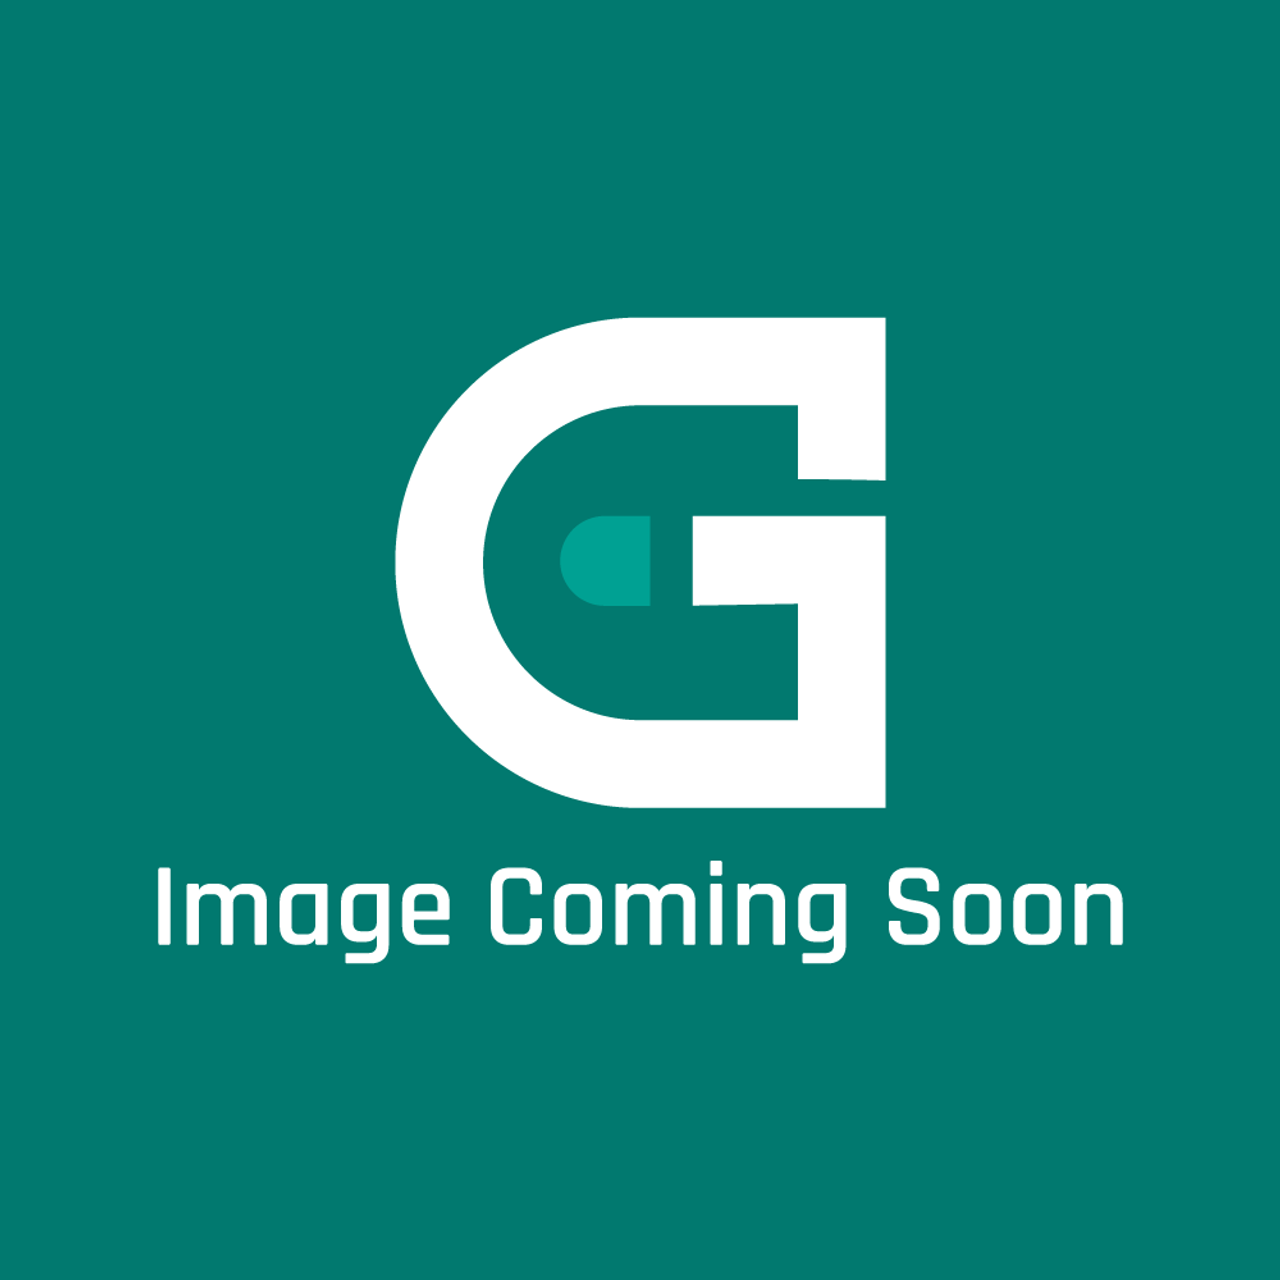 GE Appliances WB57K10158 - Crystal Window - Image Coming Soon!